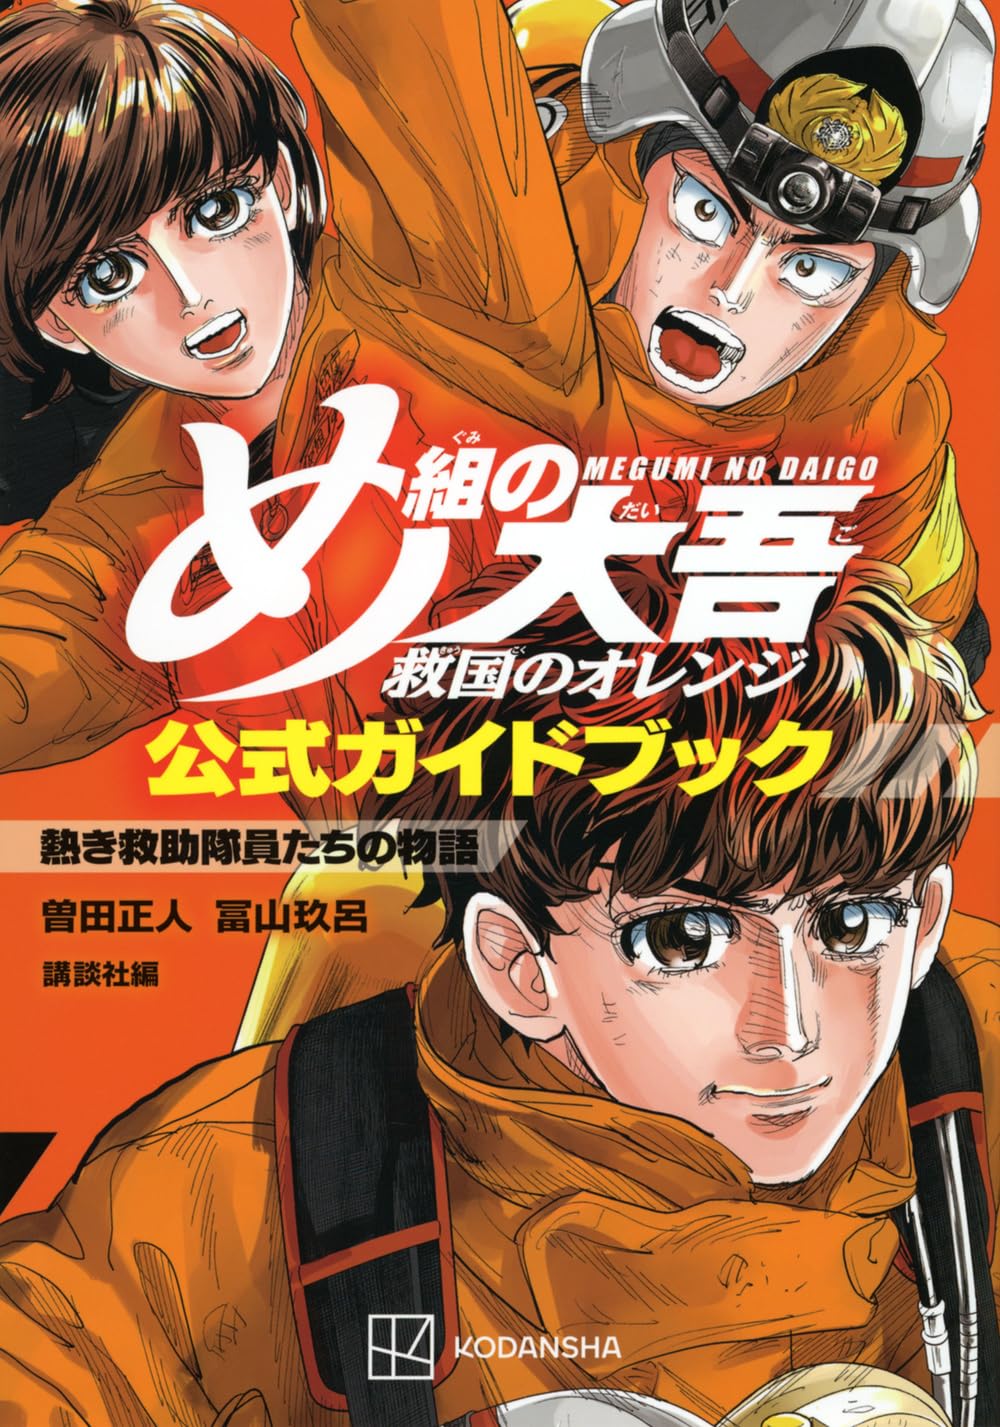 Firefighter Daigo: Rescuer in Orange Official Guide Book